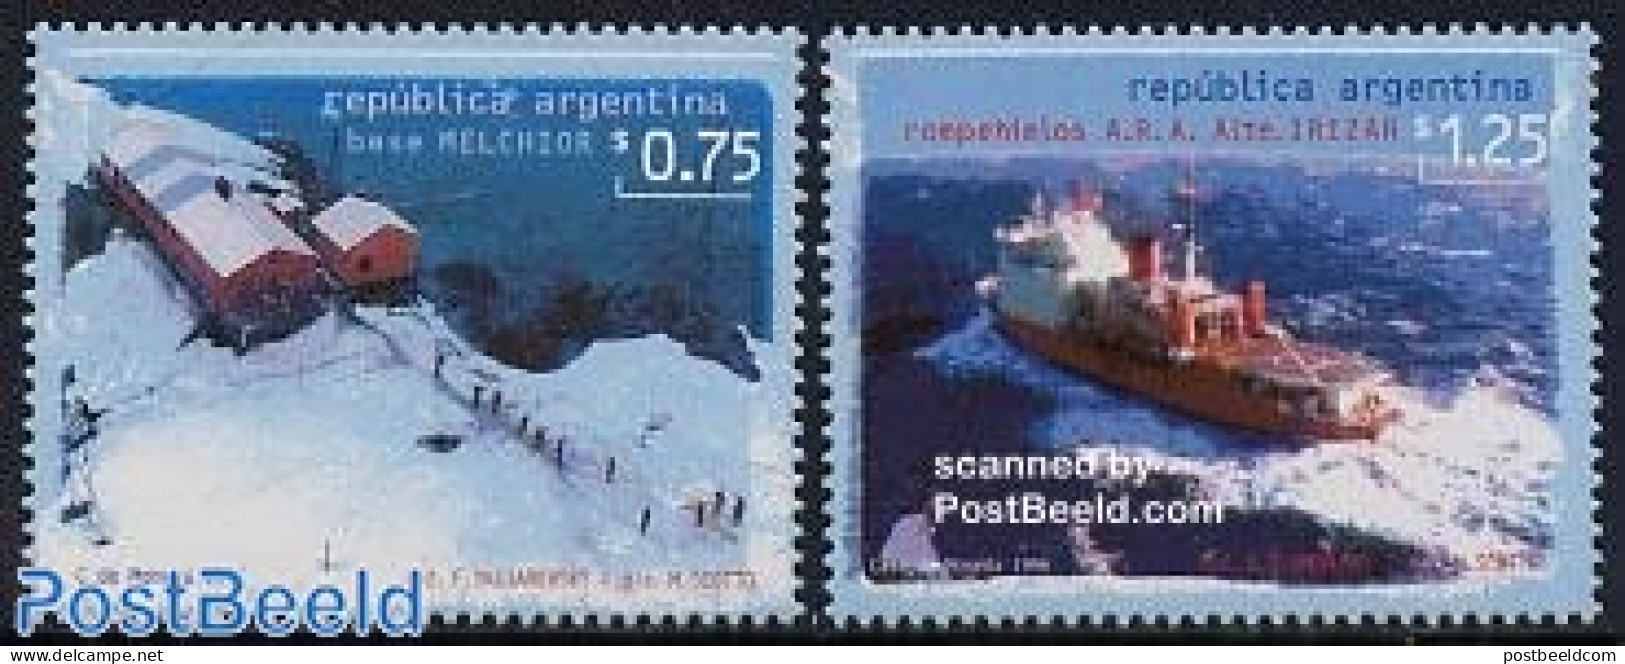 Argentina 1996 Antarctica 2v, Mint NH, Science - Transport - The Arctic & Antarctica - Ships And Boats - Ungebraucht